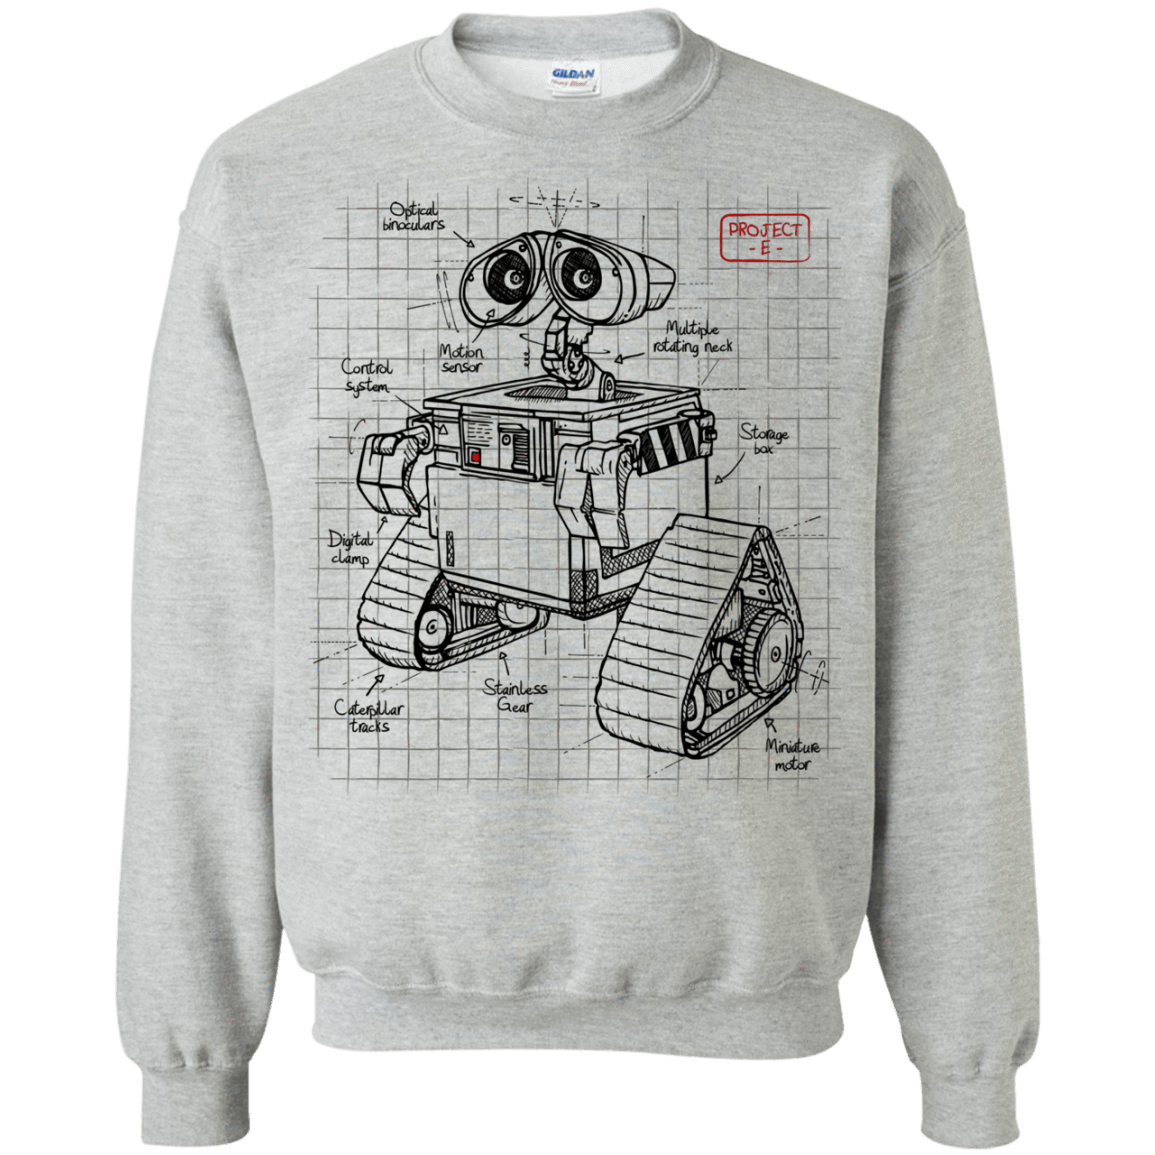 Sweatshirts Sport Grey / S WALL-E Plan Crewneck Sweatshirt